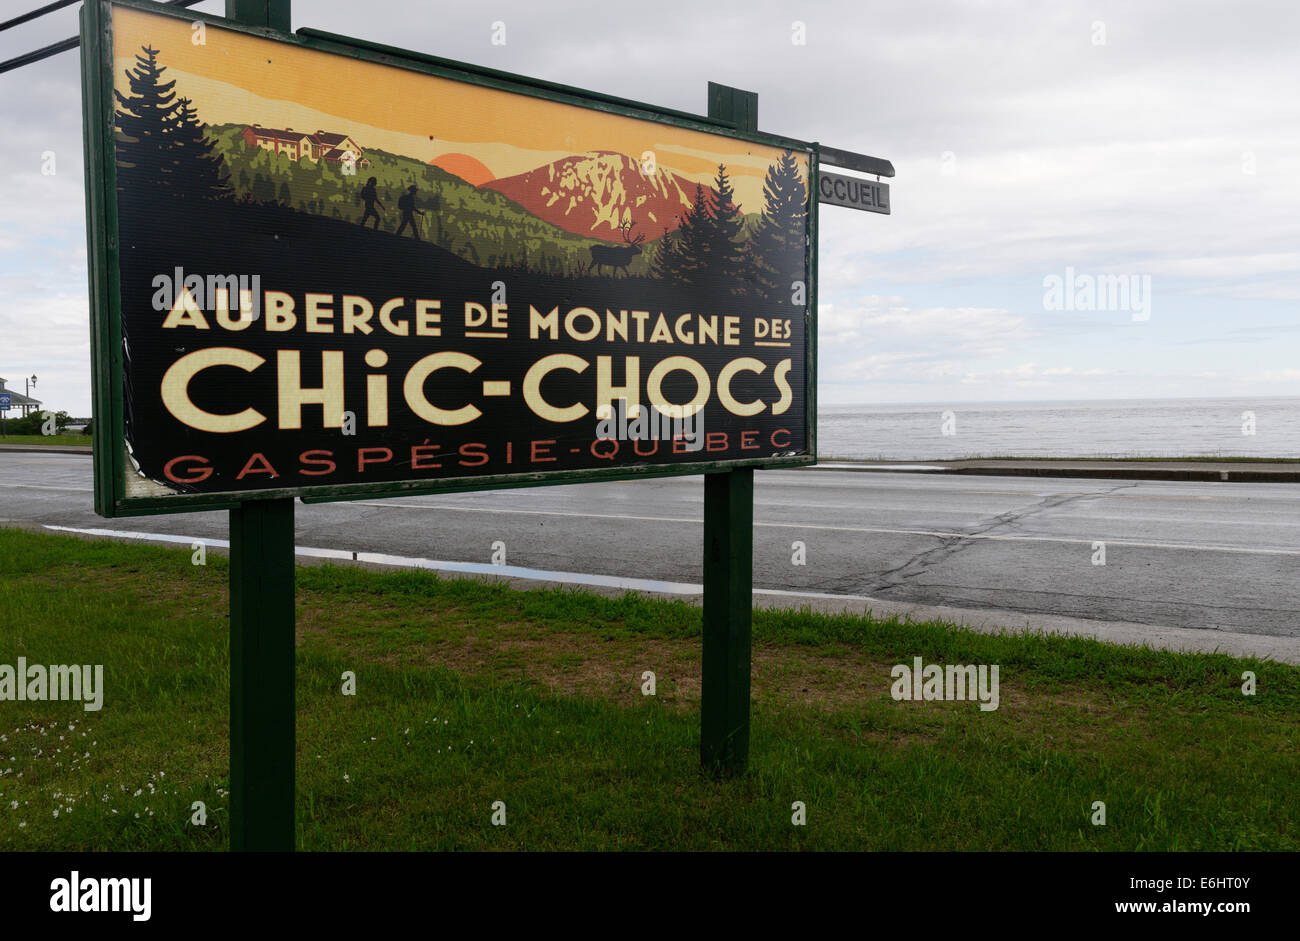 A roadside billboard for Auberge des Chic Chocs in the Parc de la Gaspesie, Quebec Stock Photo